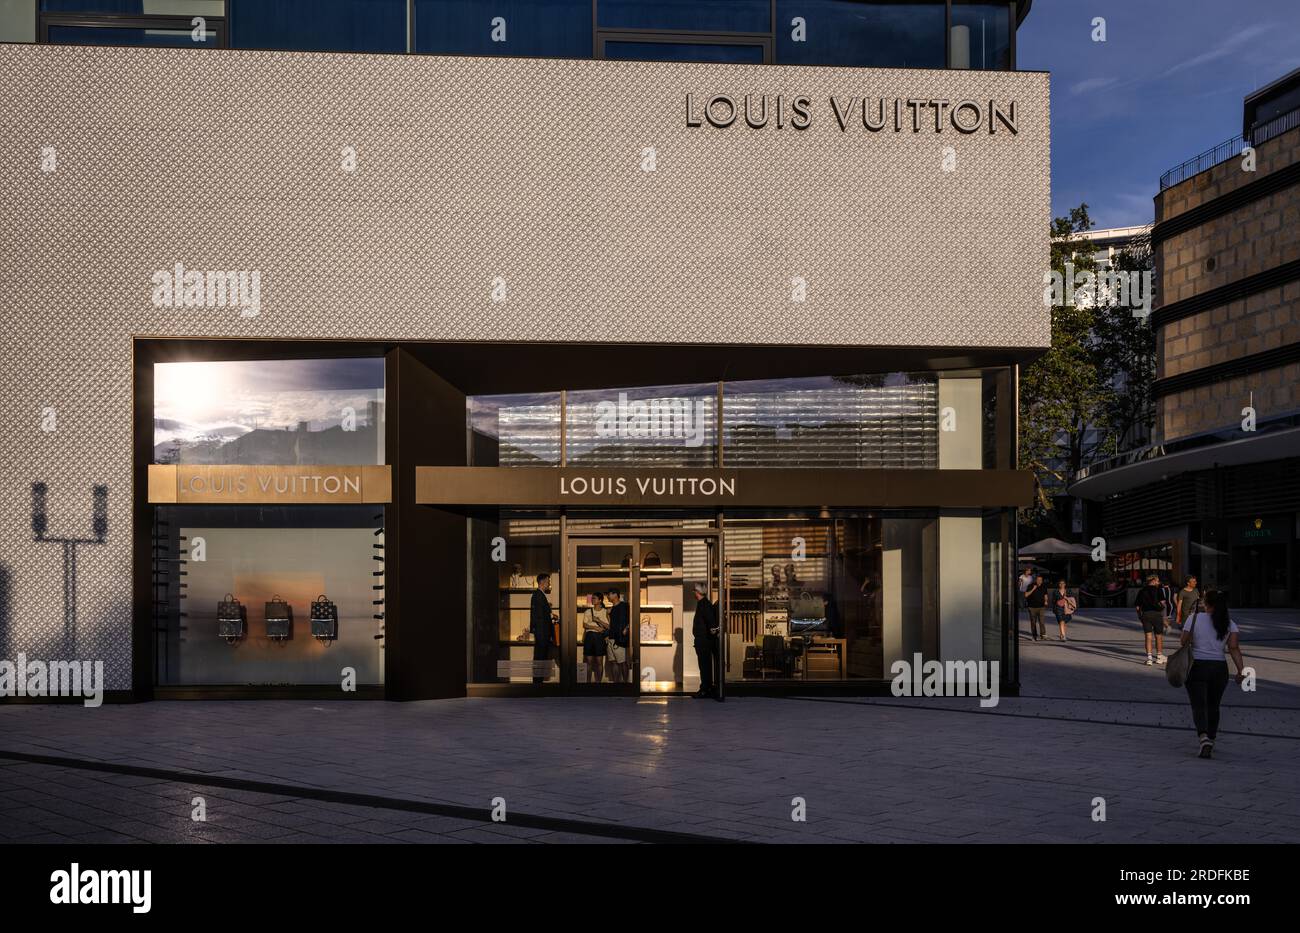 Louis Vuitton Logo Png Images & Pictures - Becuo  Louis vuitton cake,  Fashion logo branding, Clothing brand logos